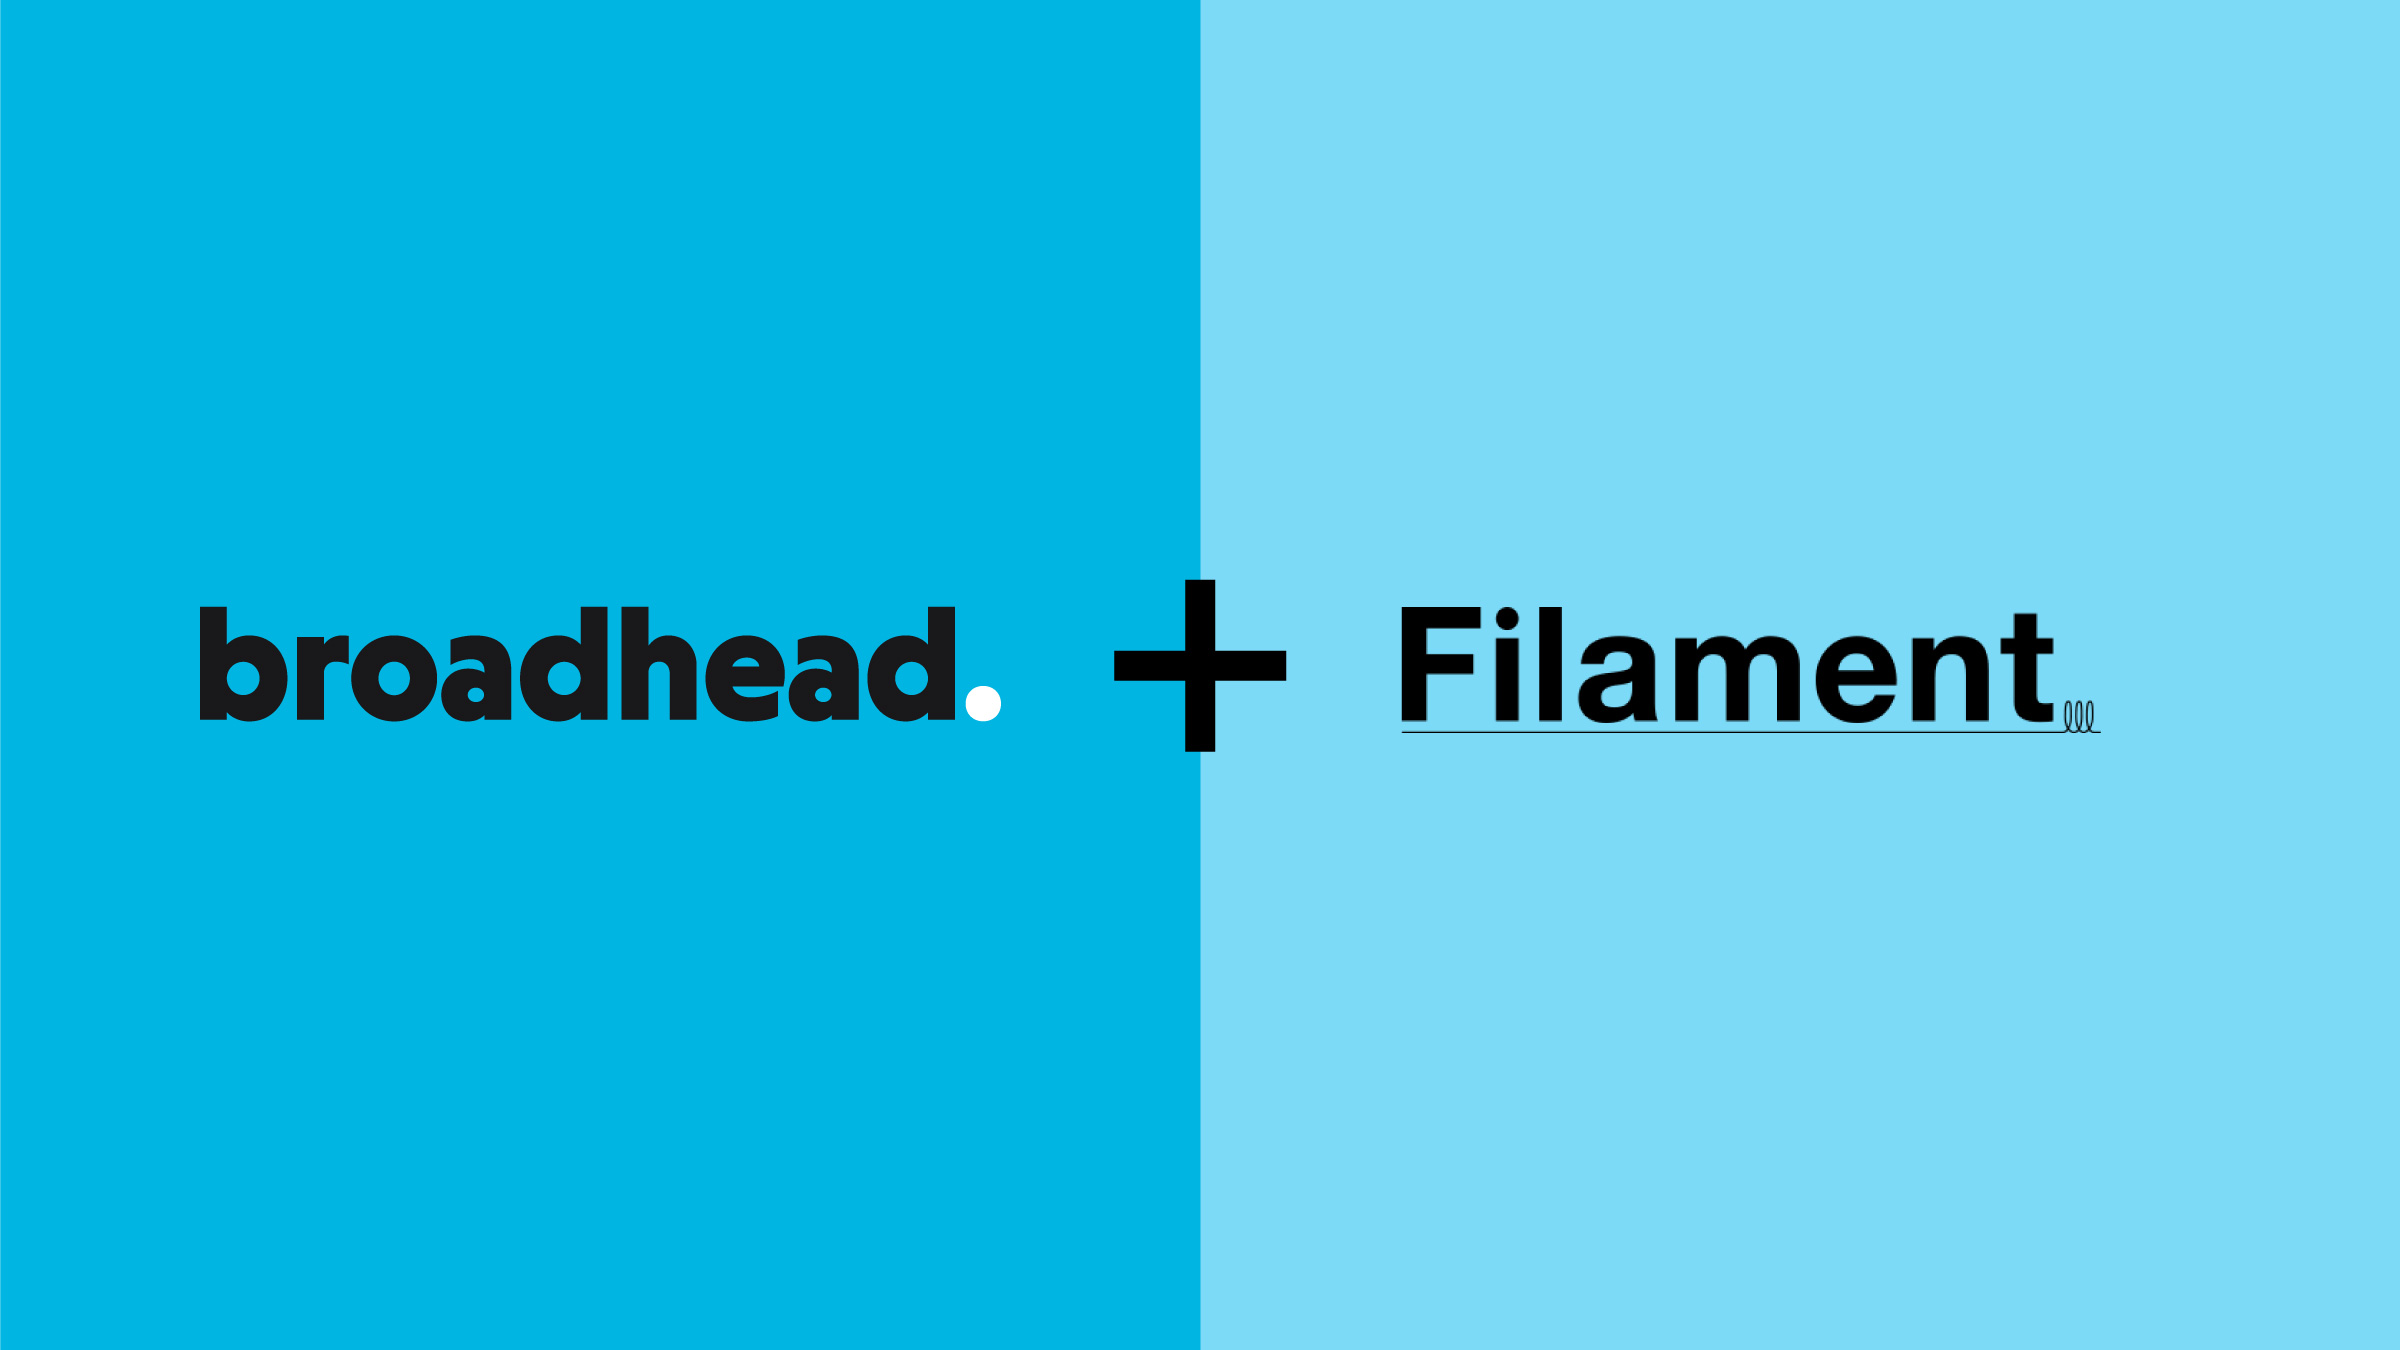 broadhead acquires Filament